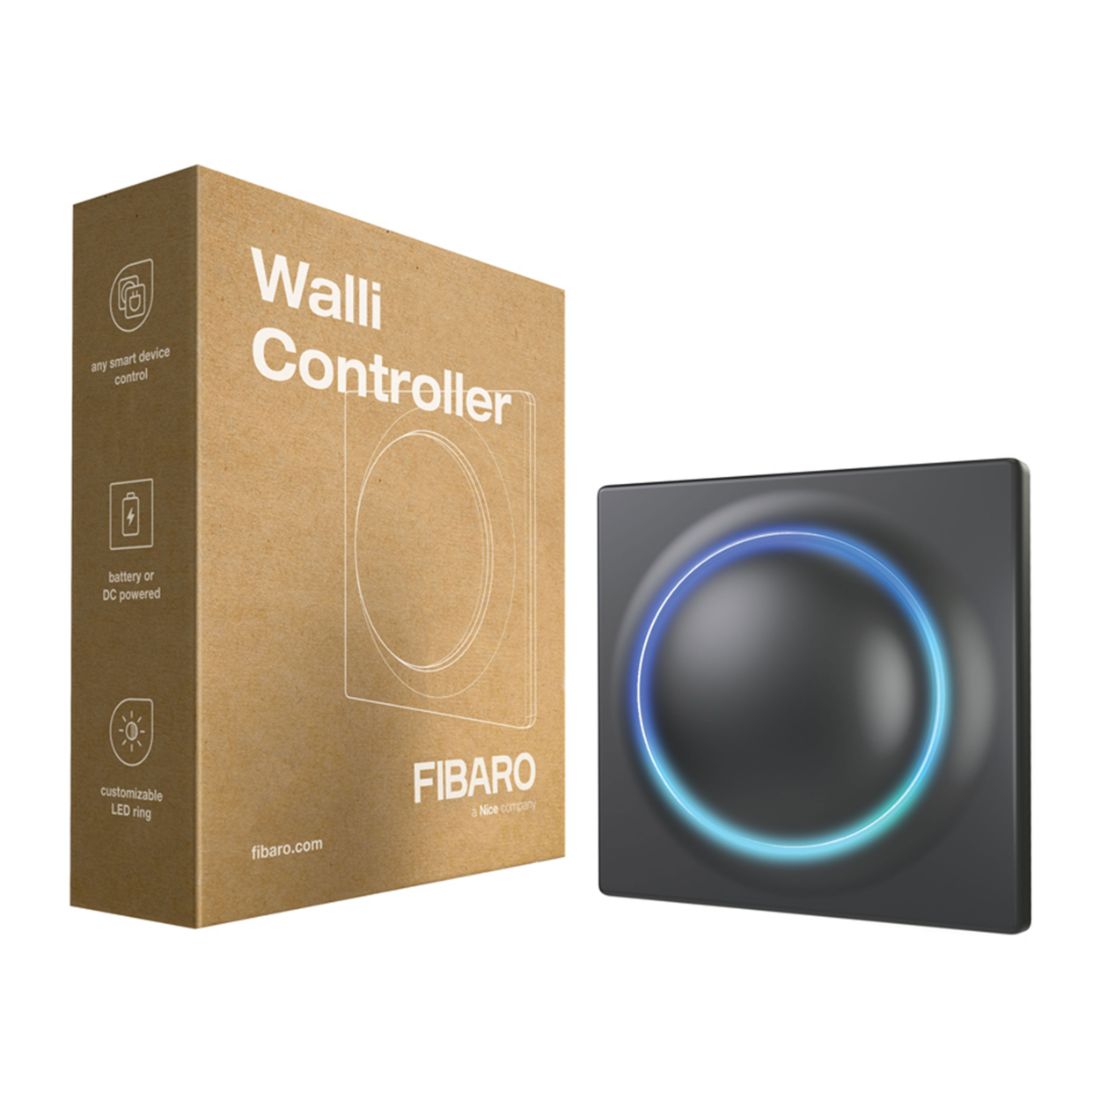 Z-Wave Fibaro Walli Controller